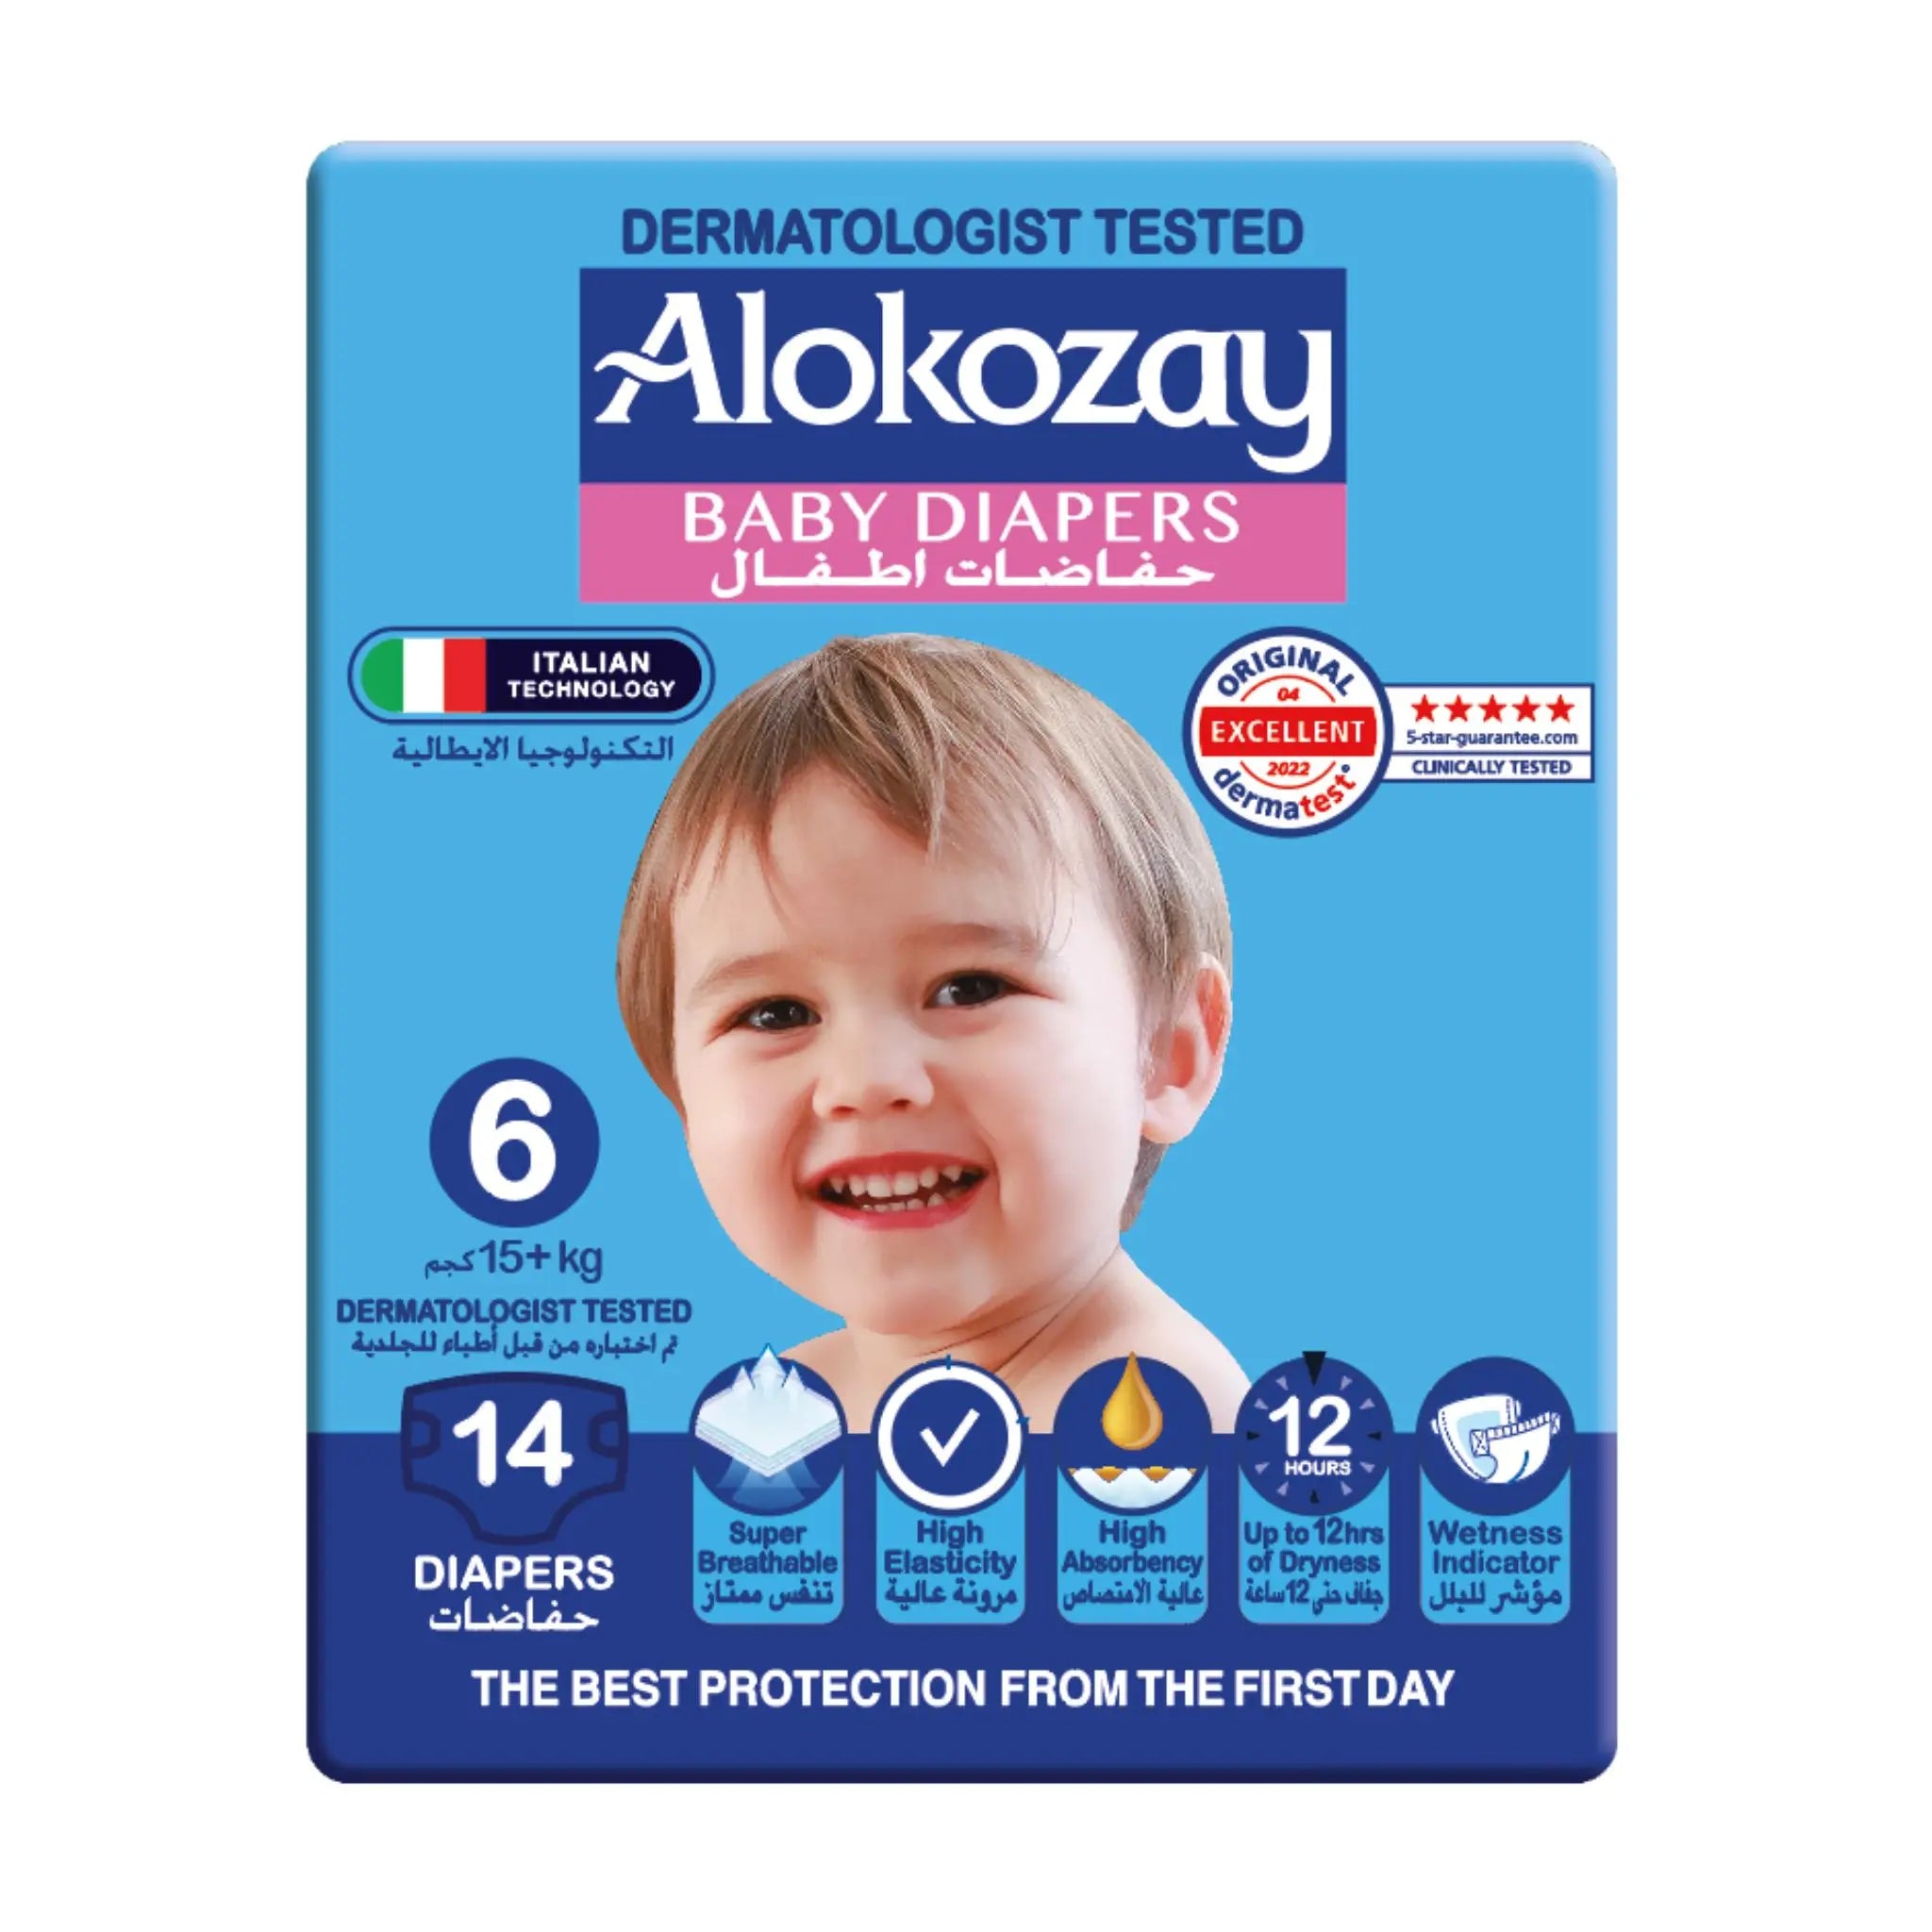 Alokozay Baby Diapers - Size 6 (15+ Kg) - 14 Diapers Marino.AE